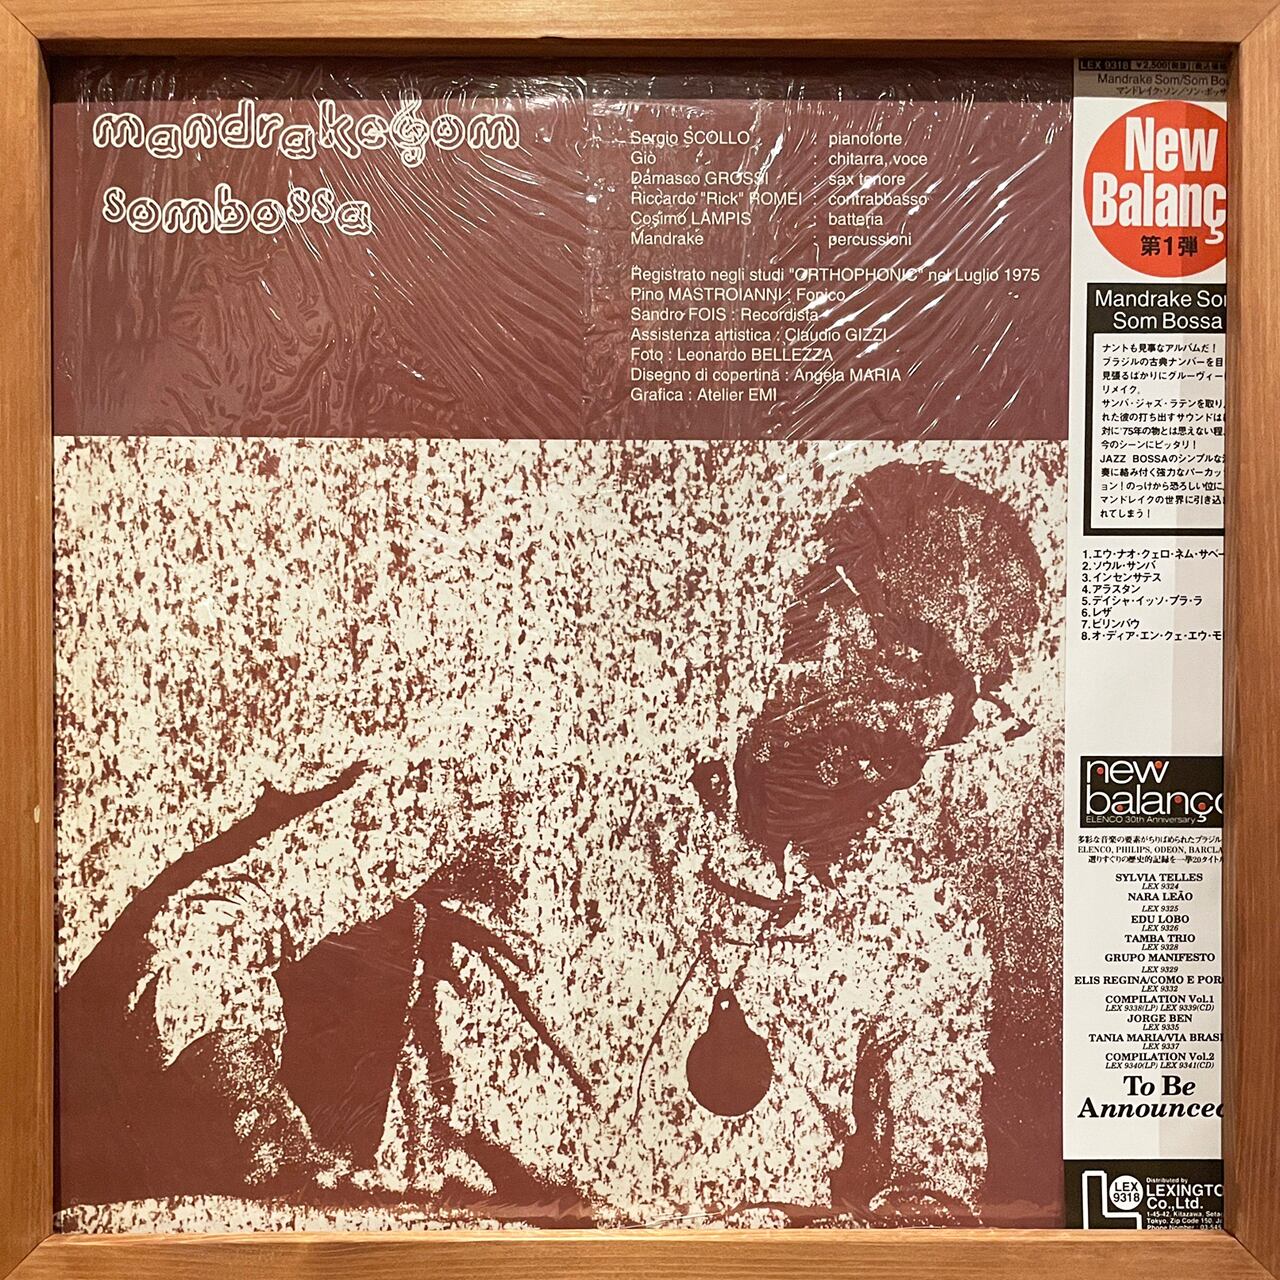 Mandrake Som – Sombossa (LP) | Underground Gallery Record Store